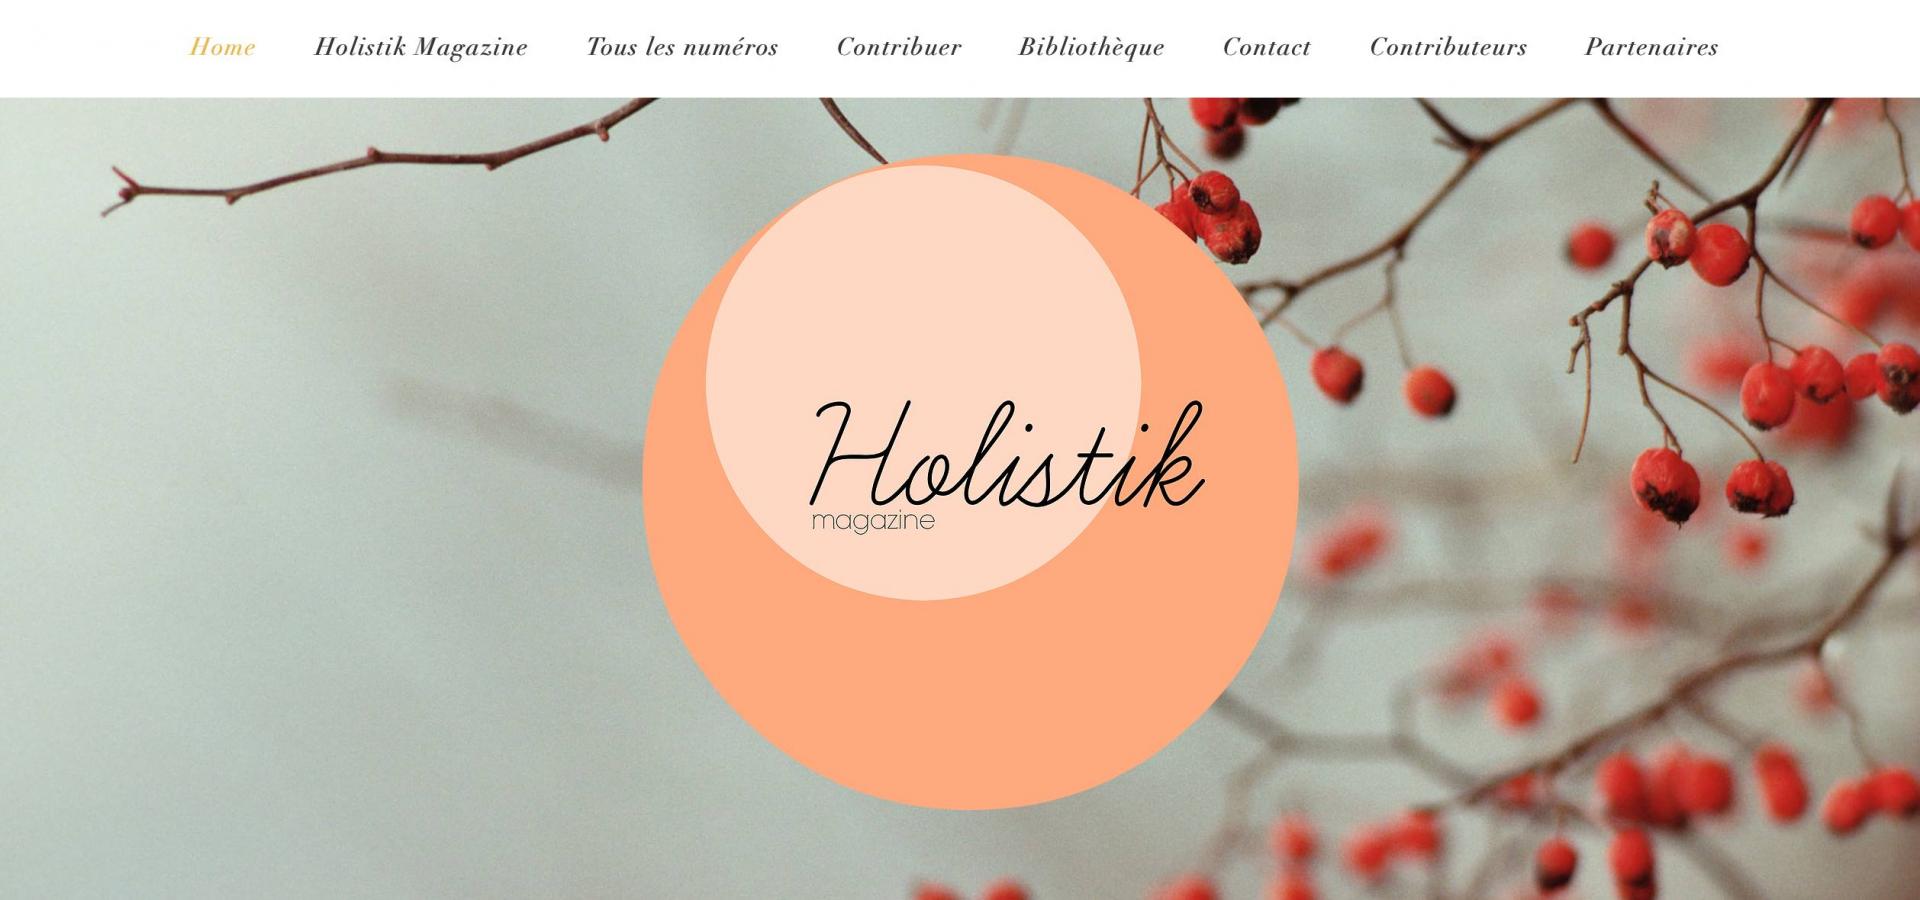 Holistik magazine 15250669 1920998184813110 8385553544040546266 o 1